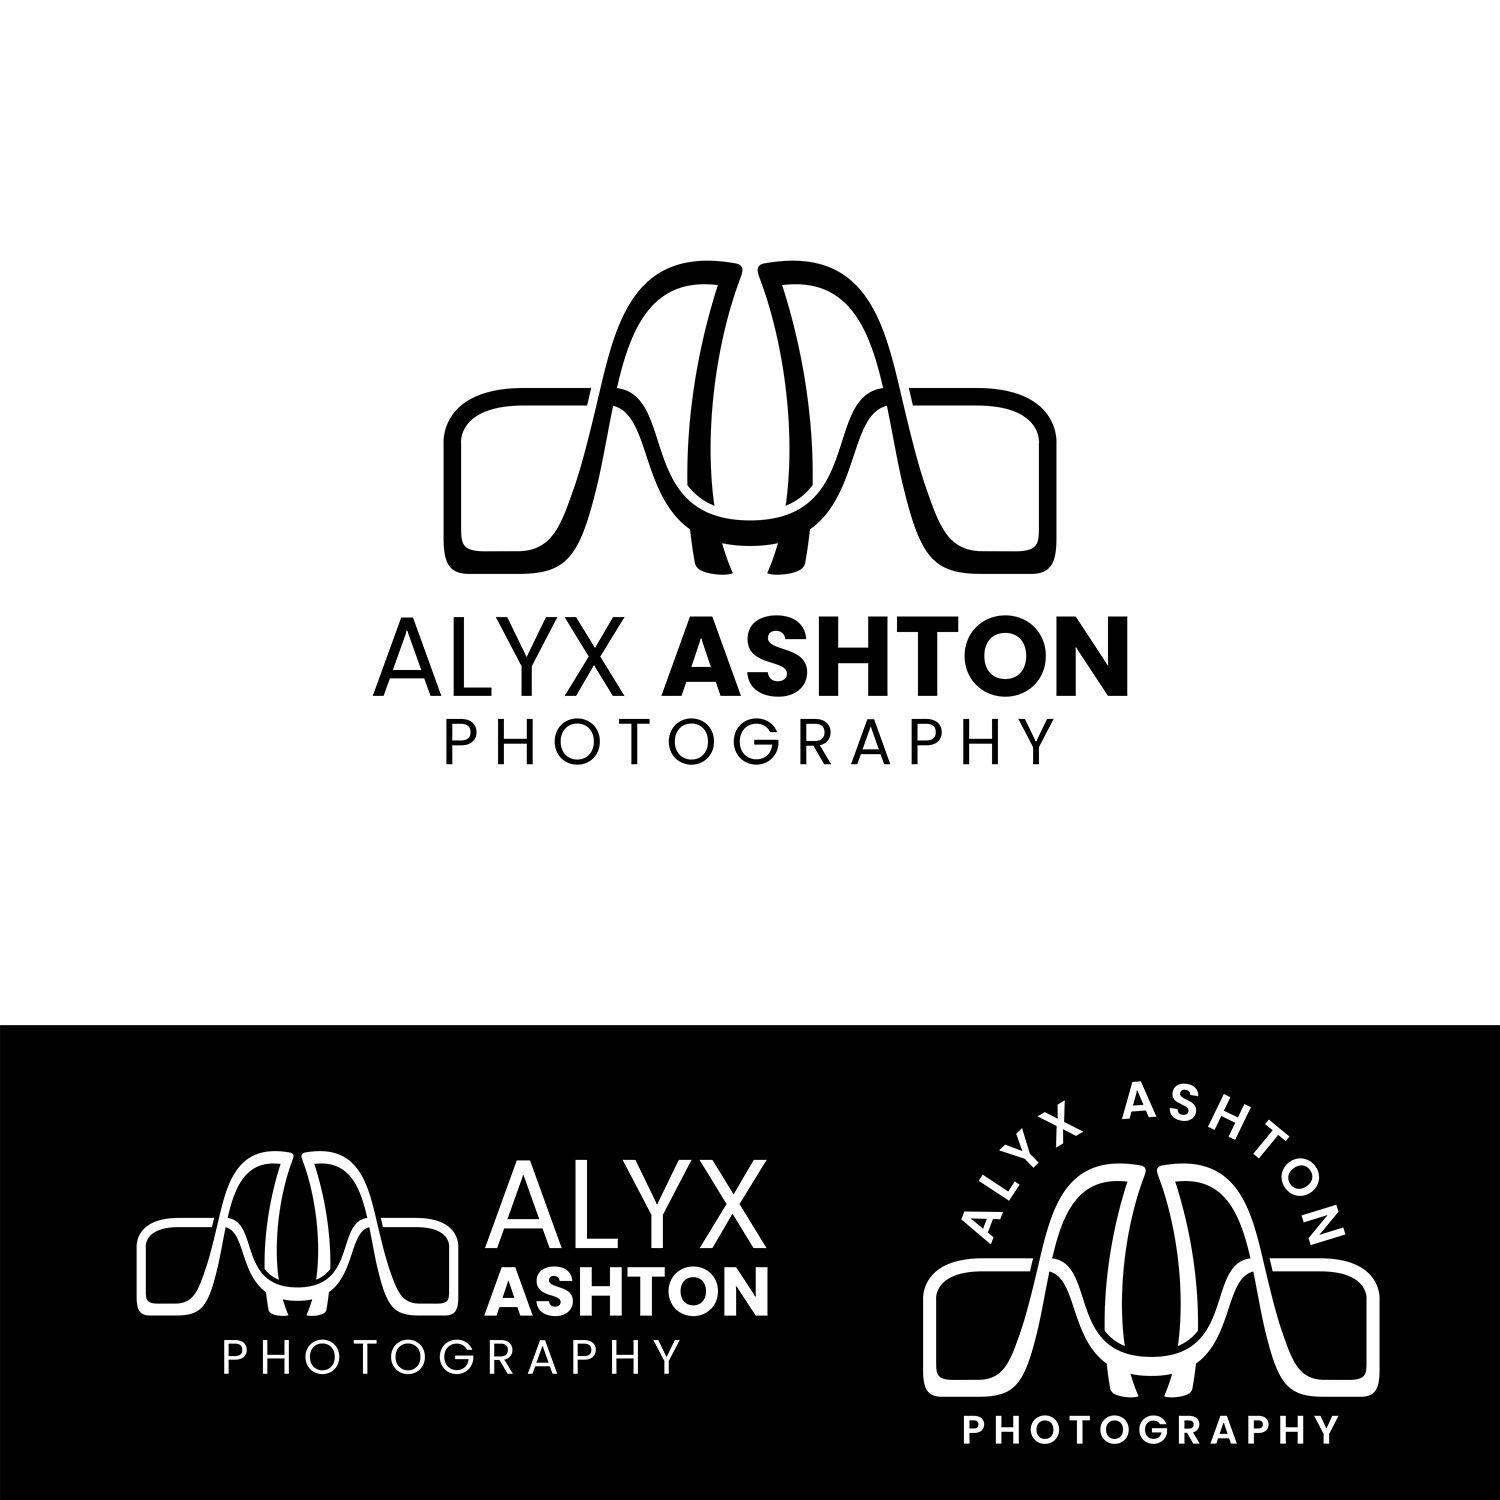 Ashton Company Logo - Upmarket, Professional, Professional Photography Logo Design for AA ...